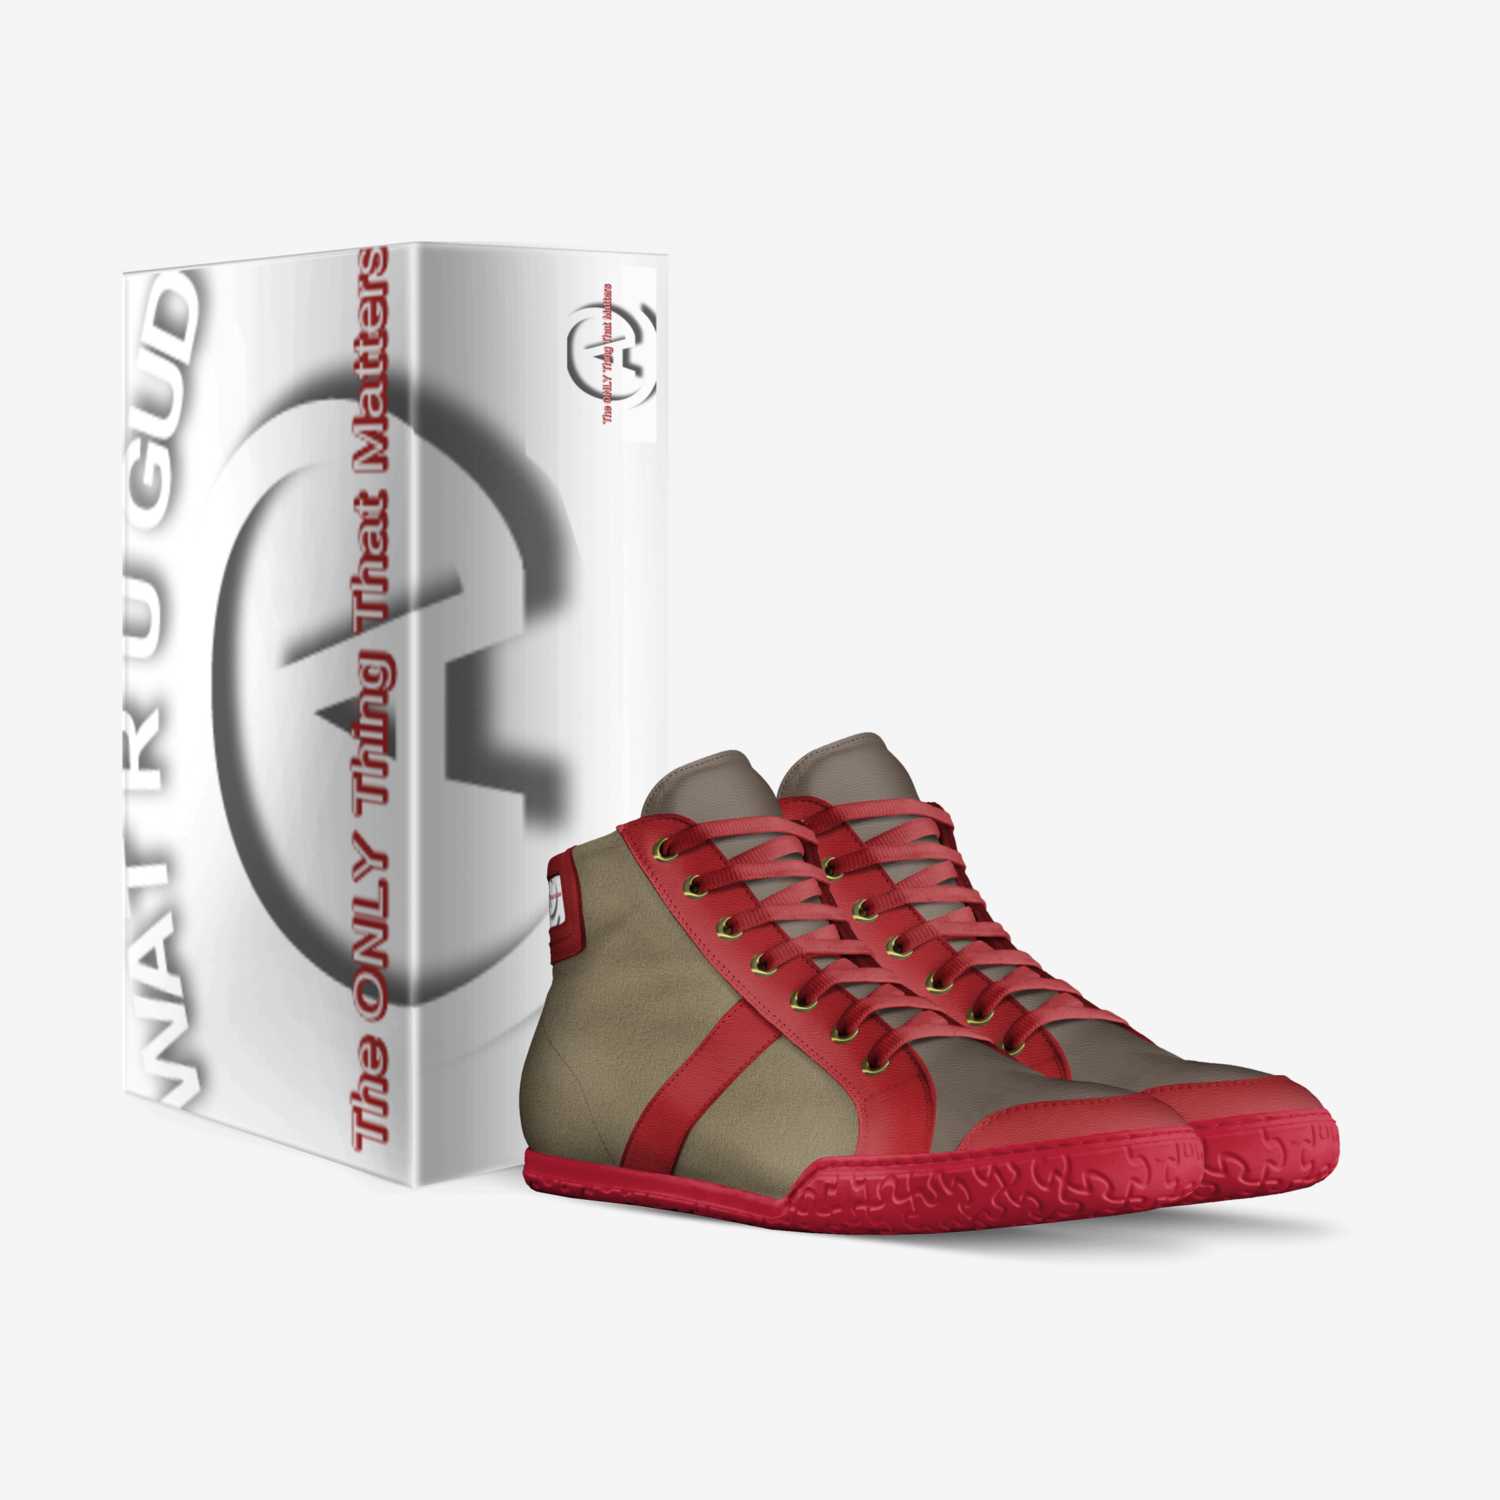 @ethr  πU $Hok®∆™  custom made in Italy shoes by Dr. Watrugudat | Box view